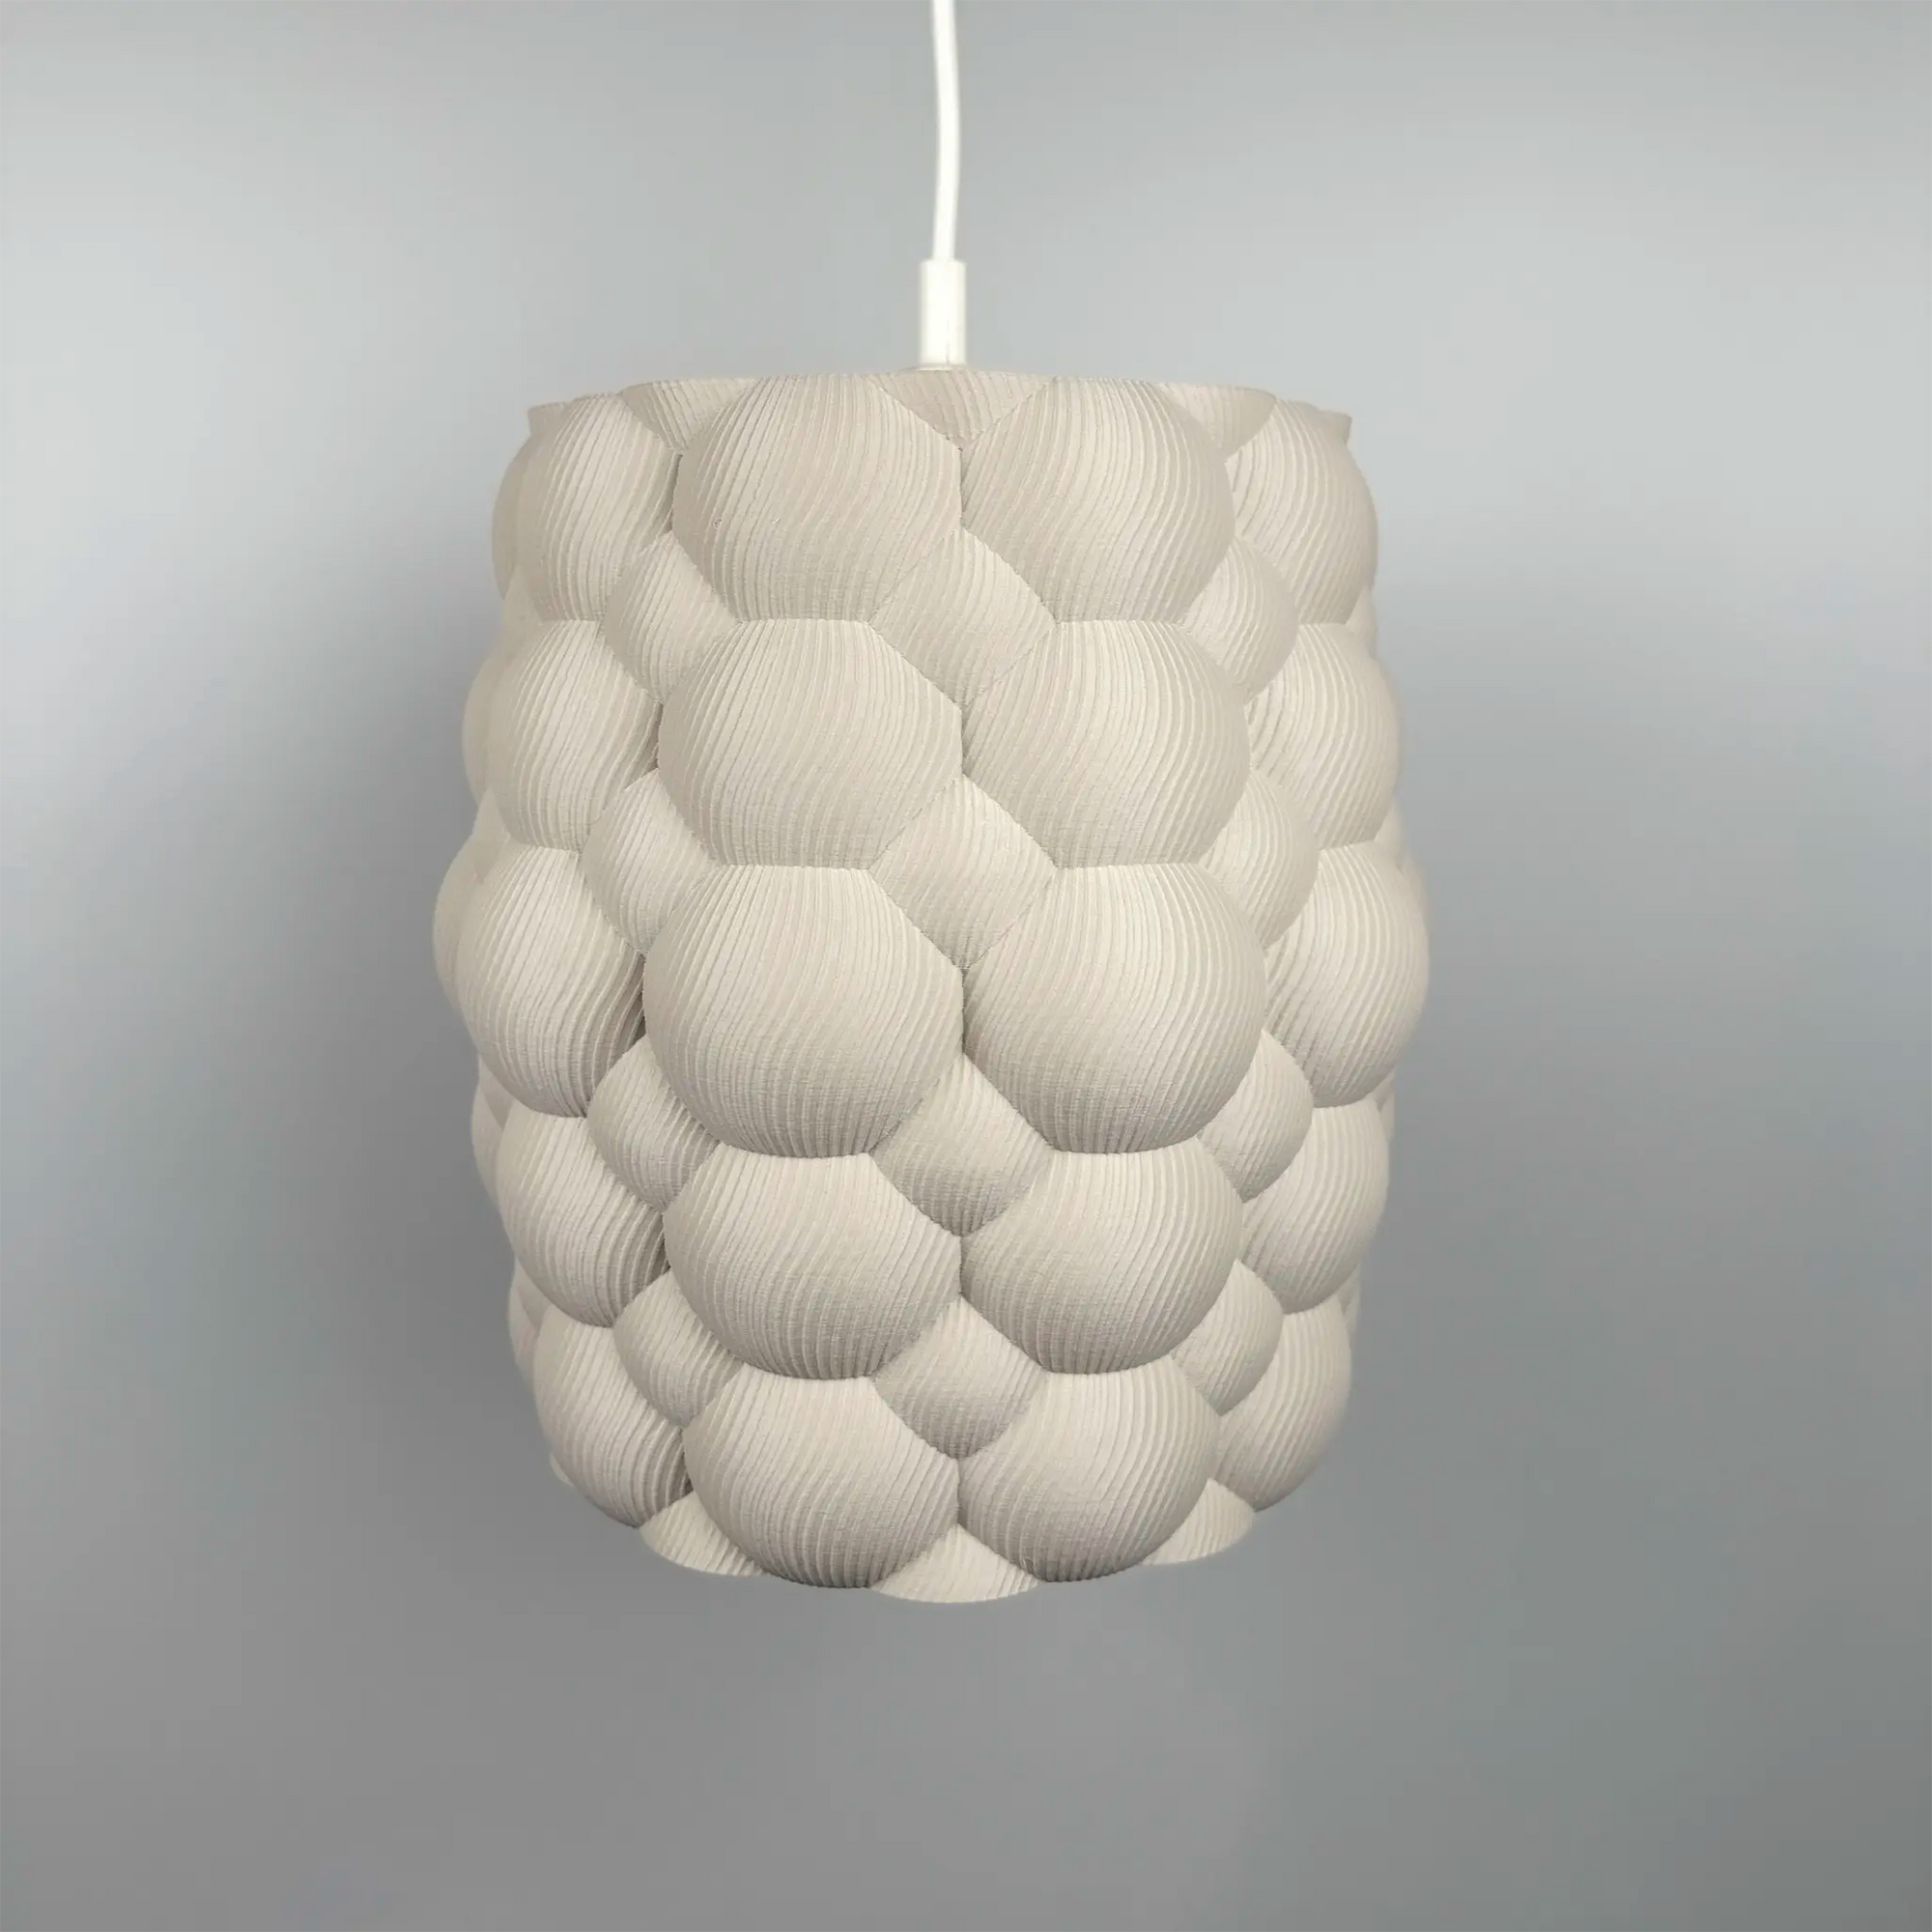 The Pop It Lampshade: Vibrant Modern Lighting